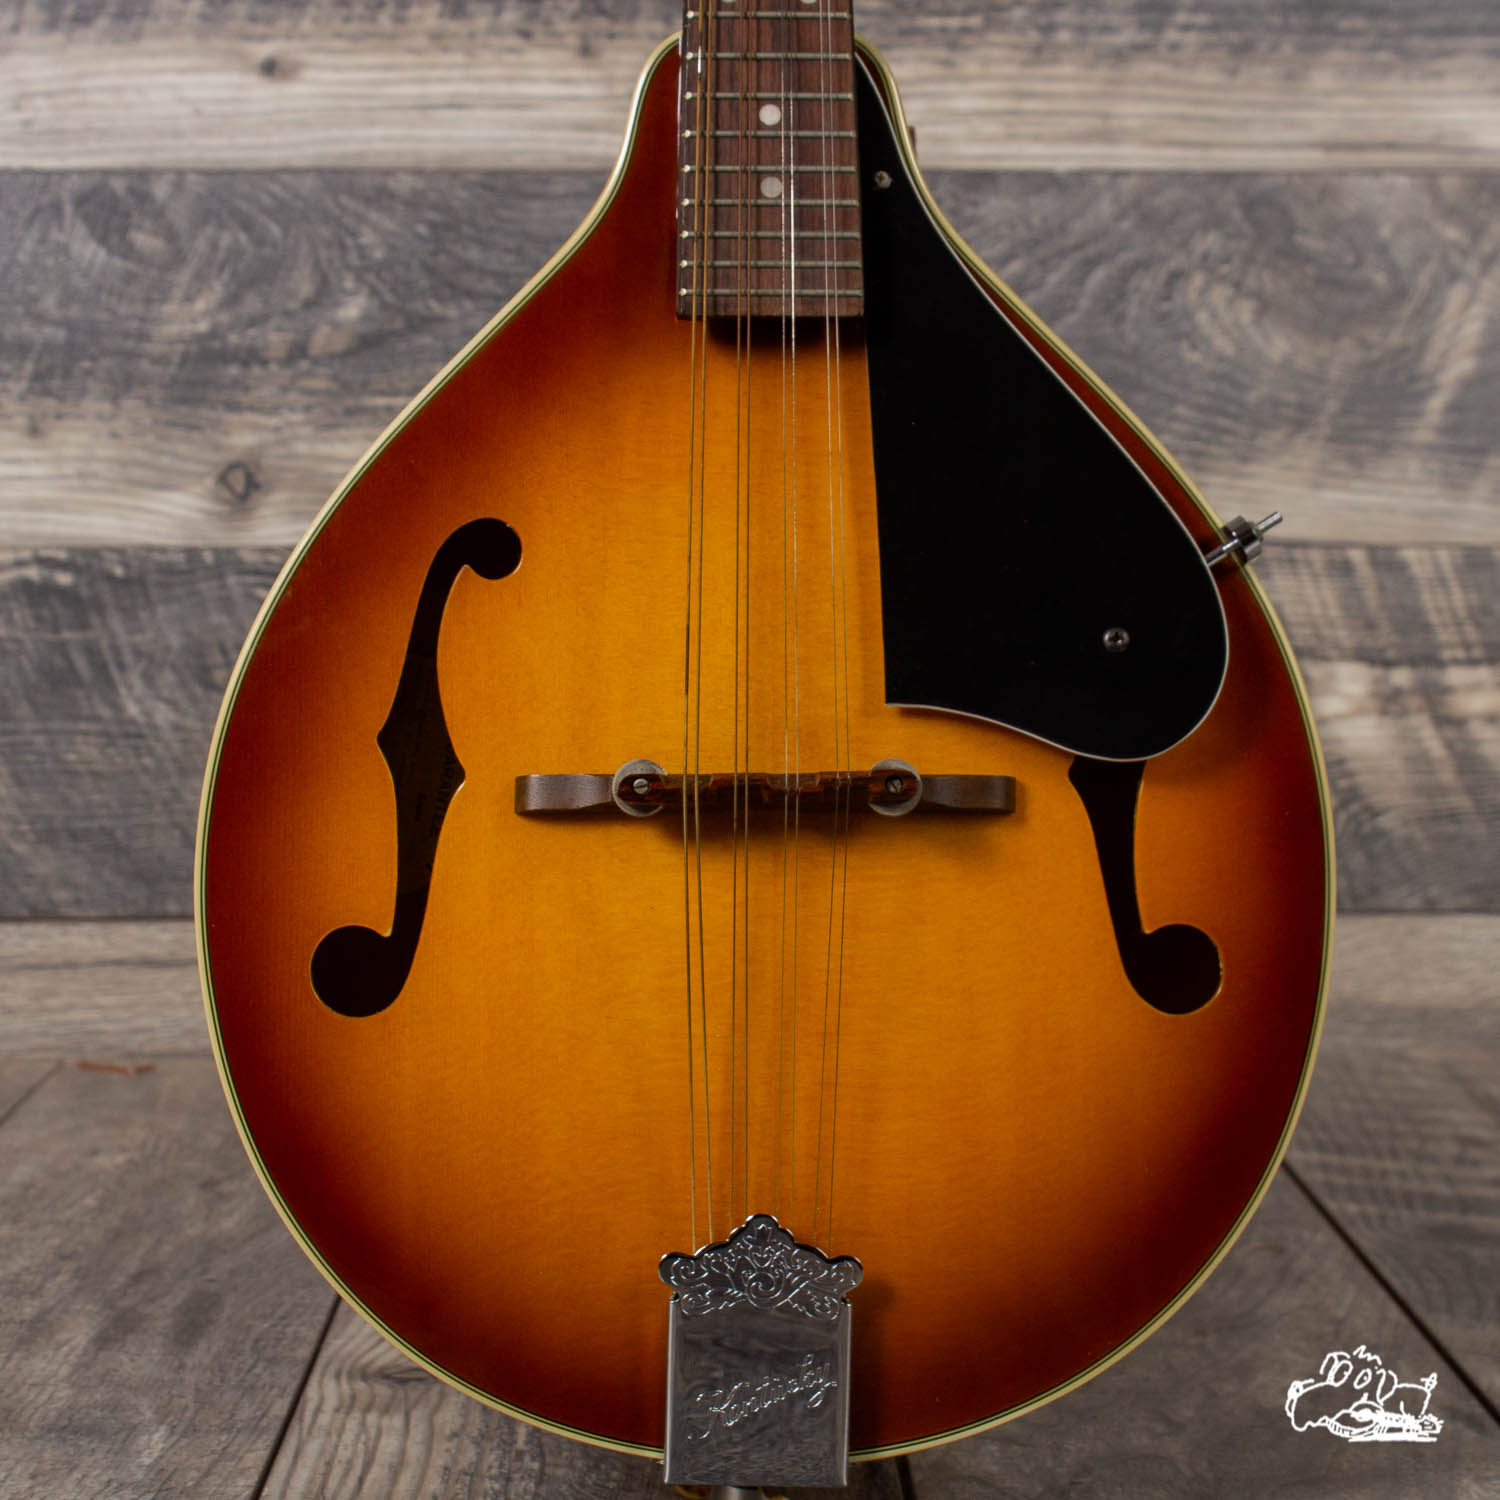 kentucky mandolin 160